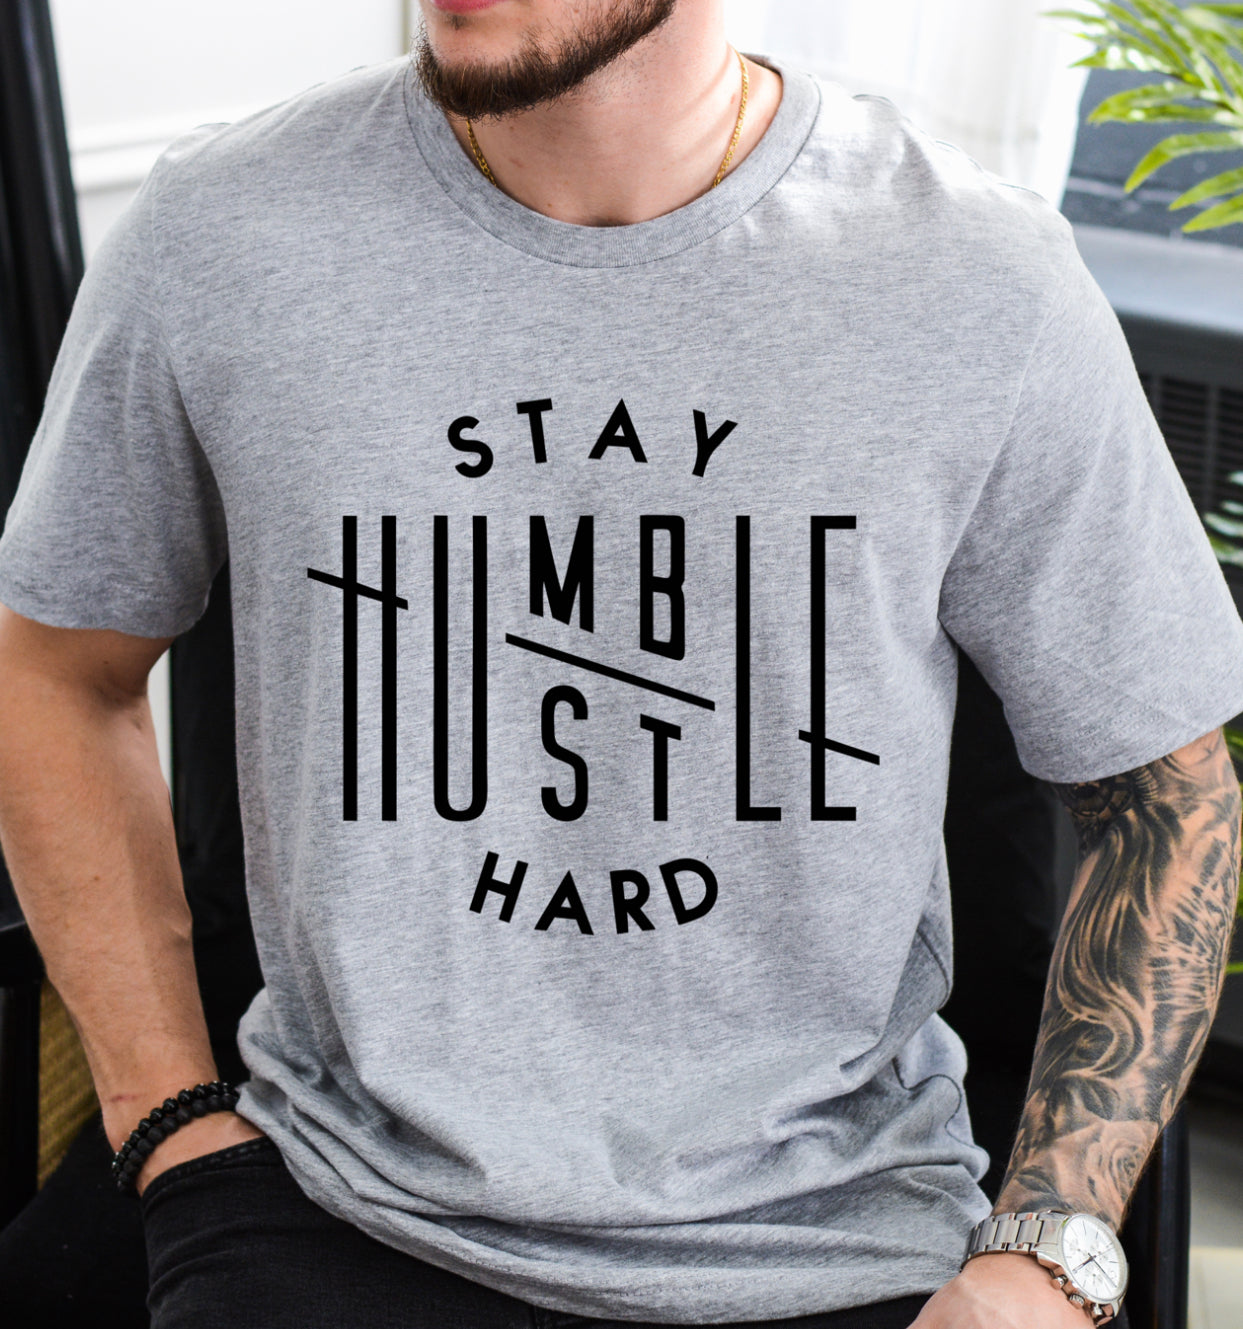 Humble / Hustle